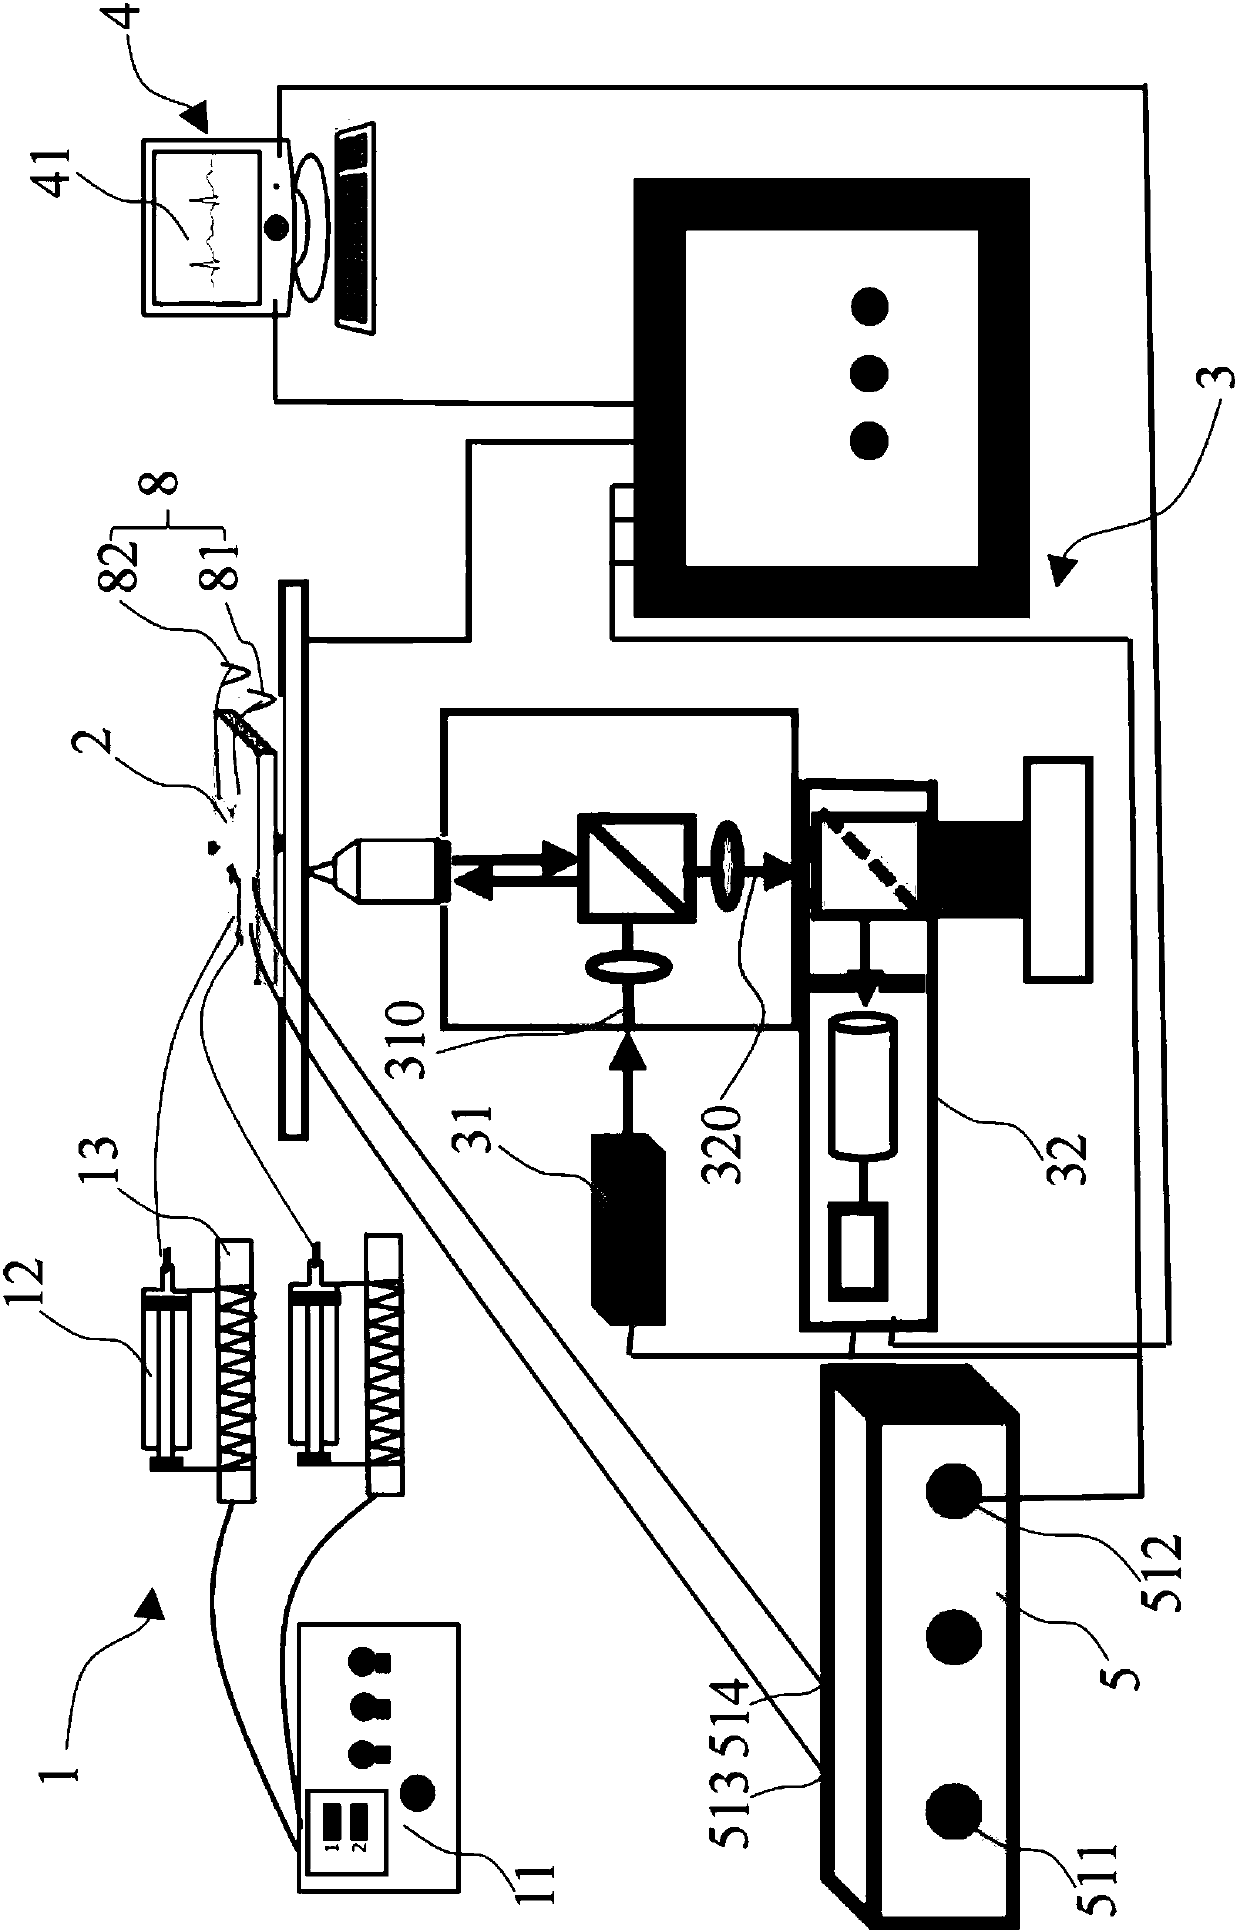 High-throughput screening apparatus using droplet micro-fluidic chip